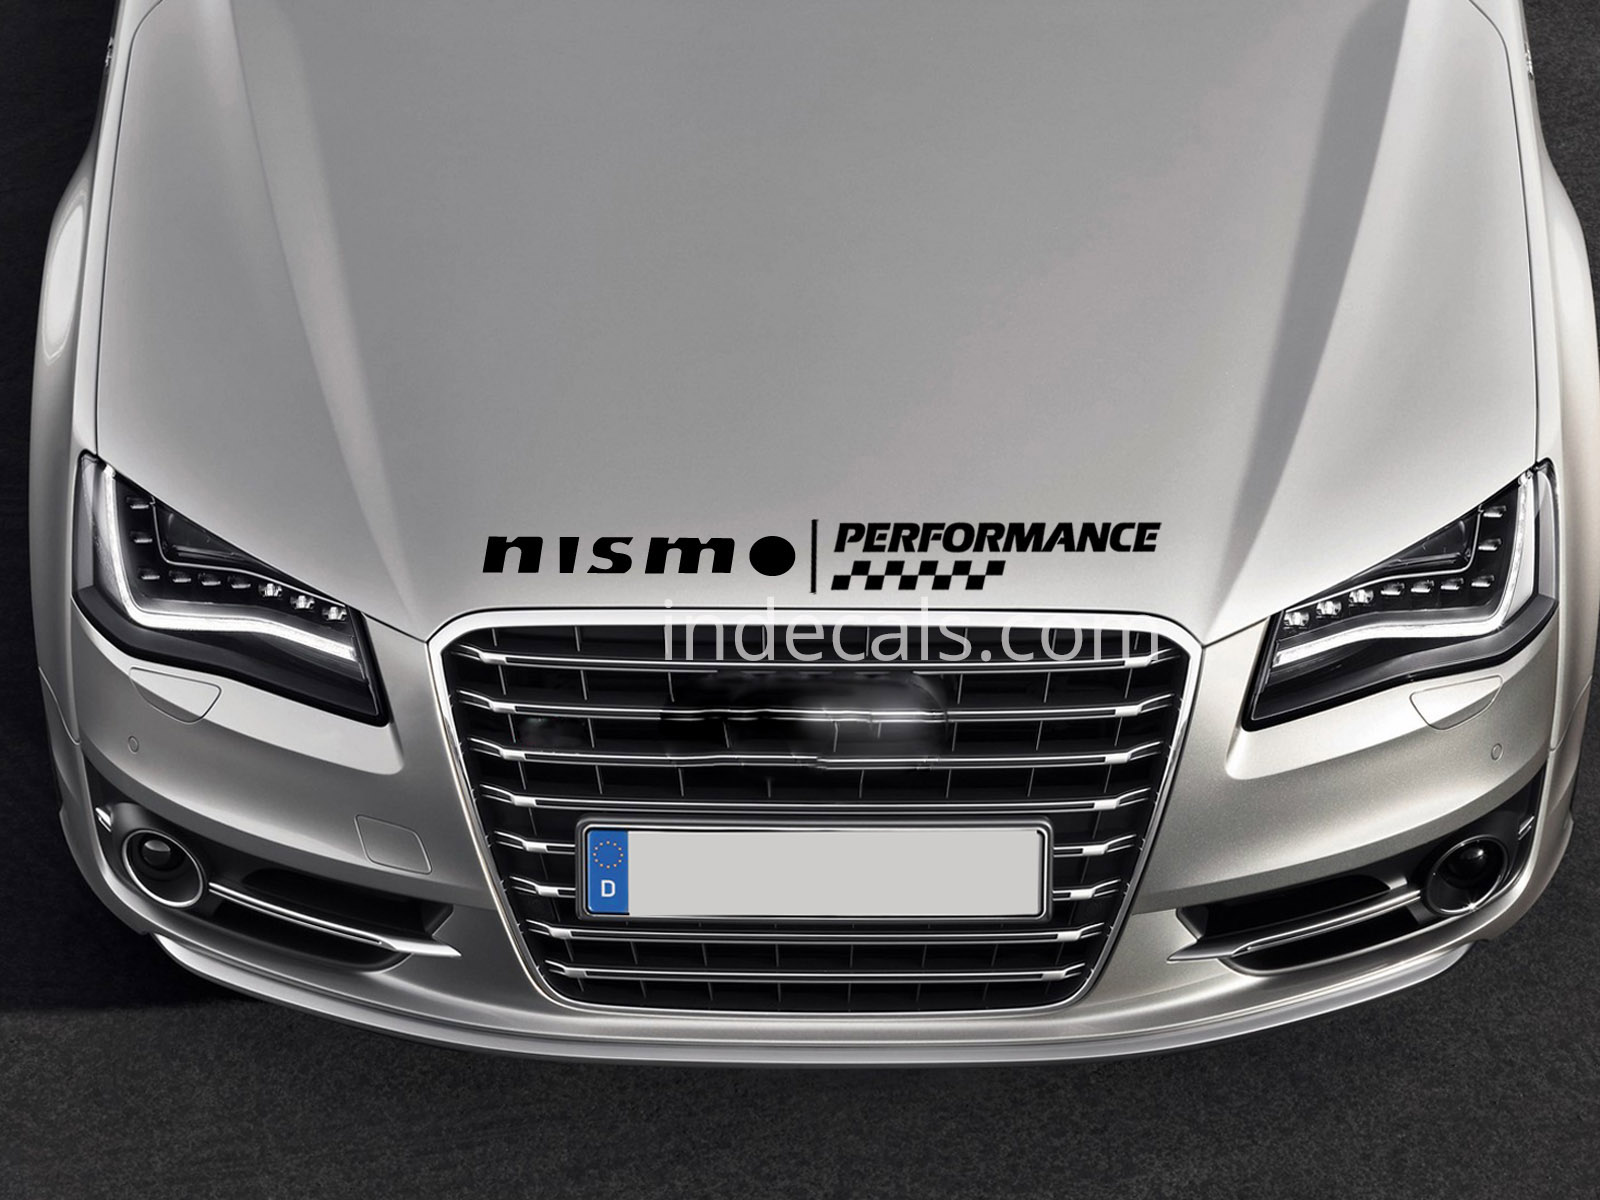 1 x Nismo Performance Sticker for Bonnet - Black